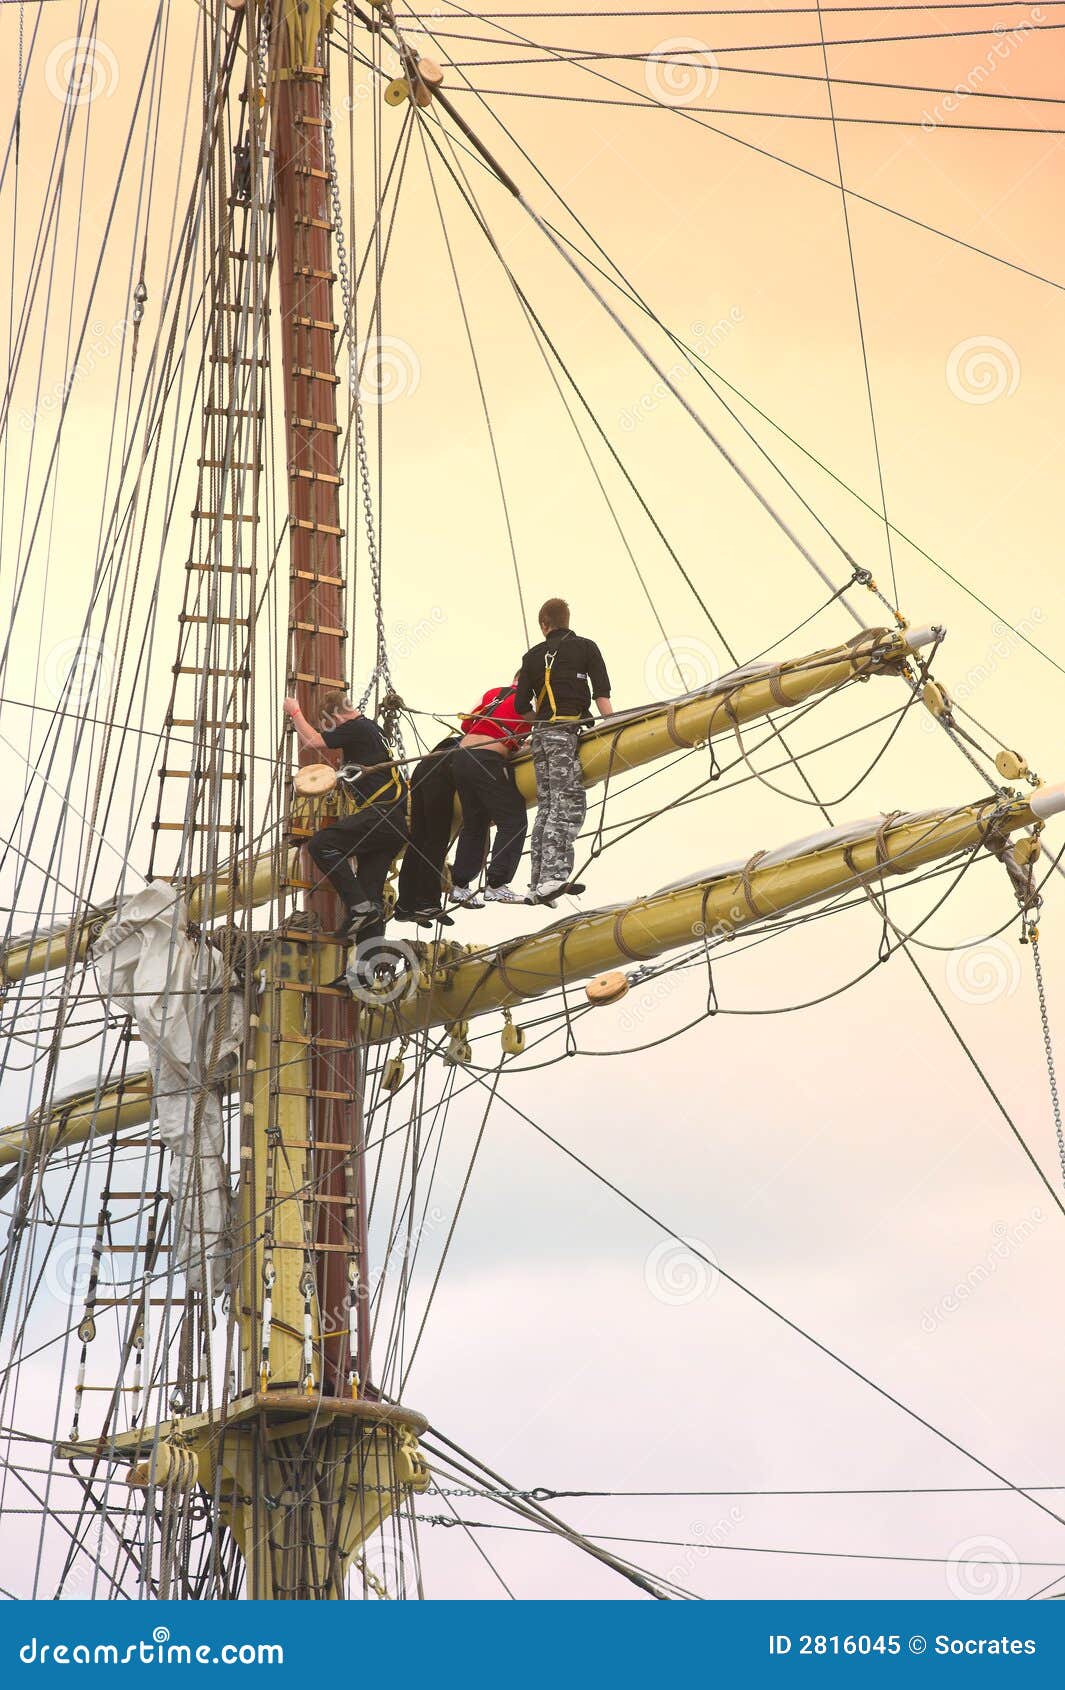 sailors on sailboat rigging